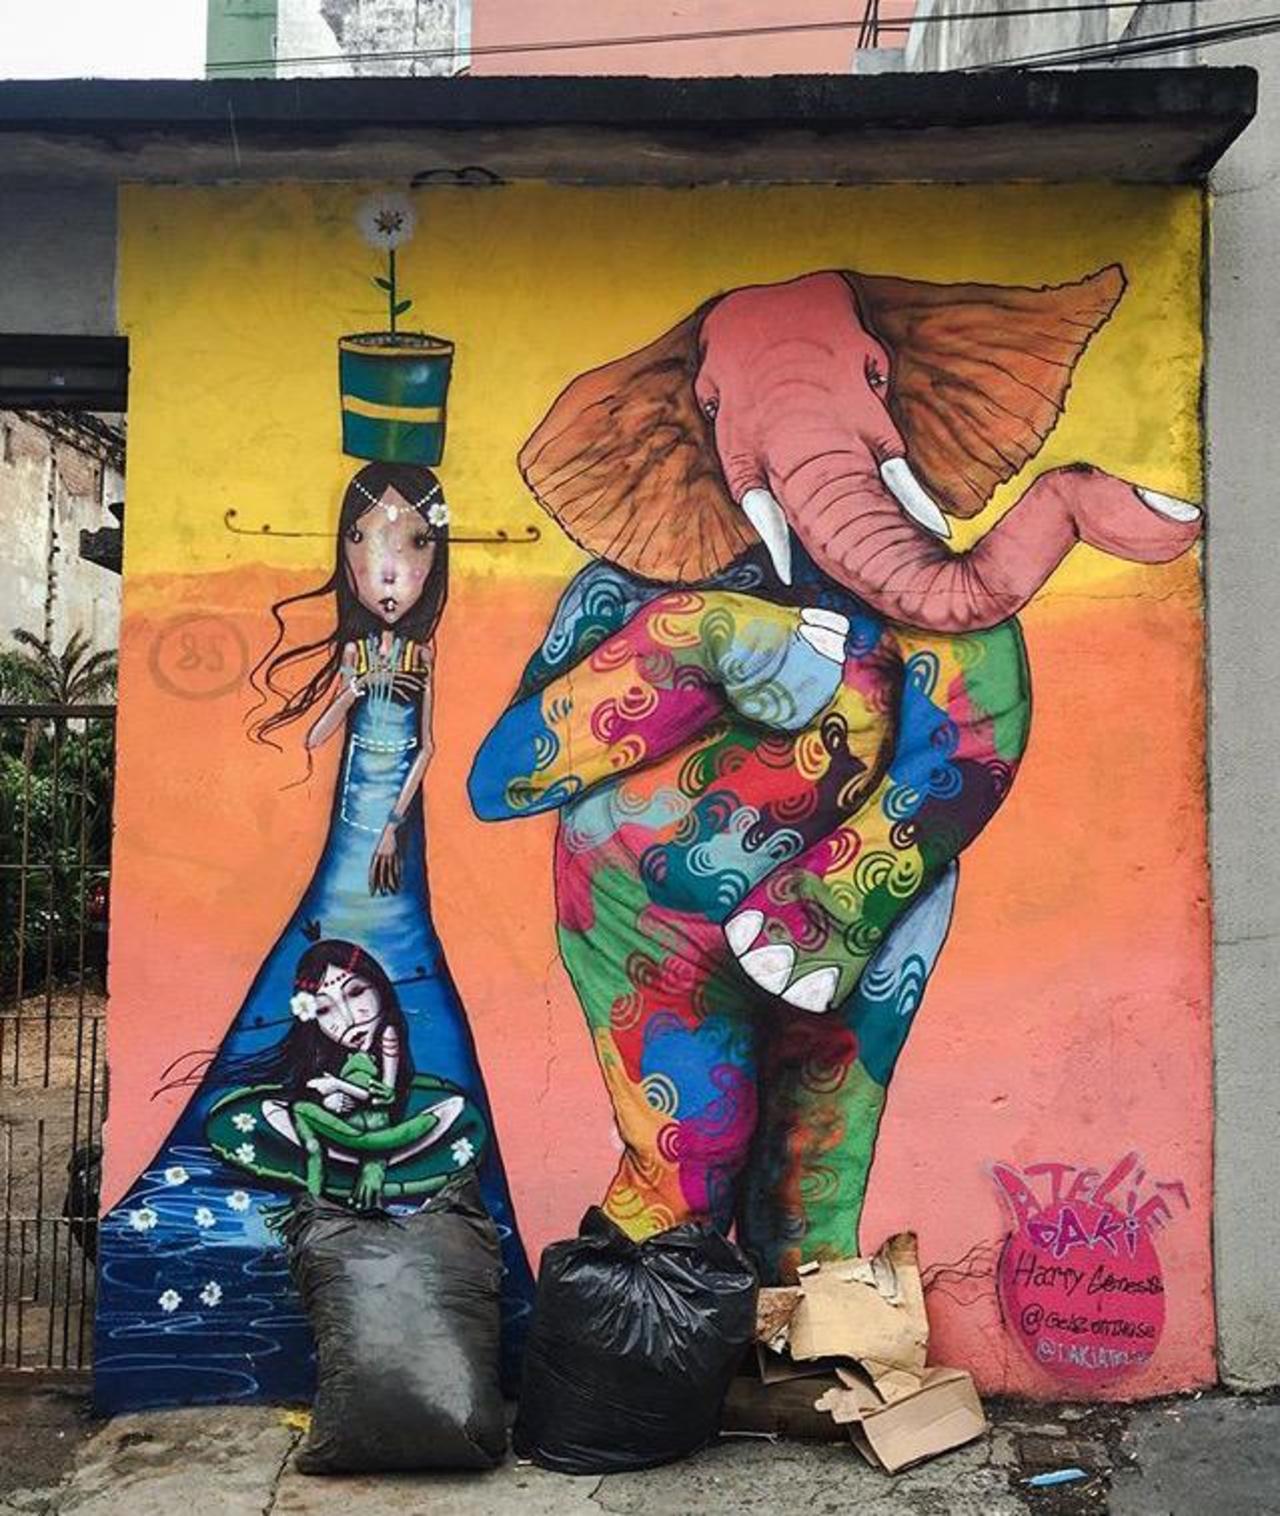 Street Art by Harry Geneis & Gelson in São Paulo 

#art #mural #graffiti #streetart http://t.co/SlLbhuMZfD http://twitter.com/GoogleStreetArt/status/648016473831645184/photo/1/large?utm_source=fb&utm_medium=fb&utm_campaign=charlesjackso14&utm_content=648017655975313408